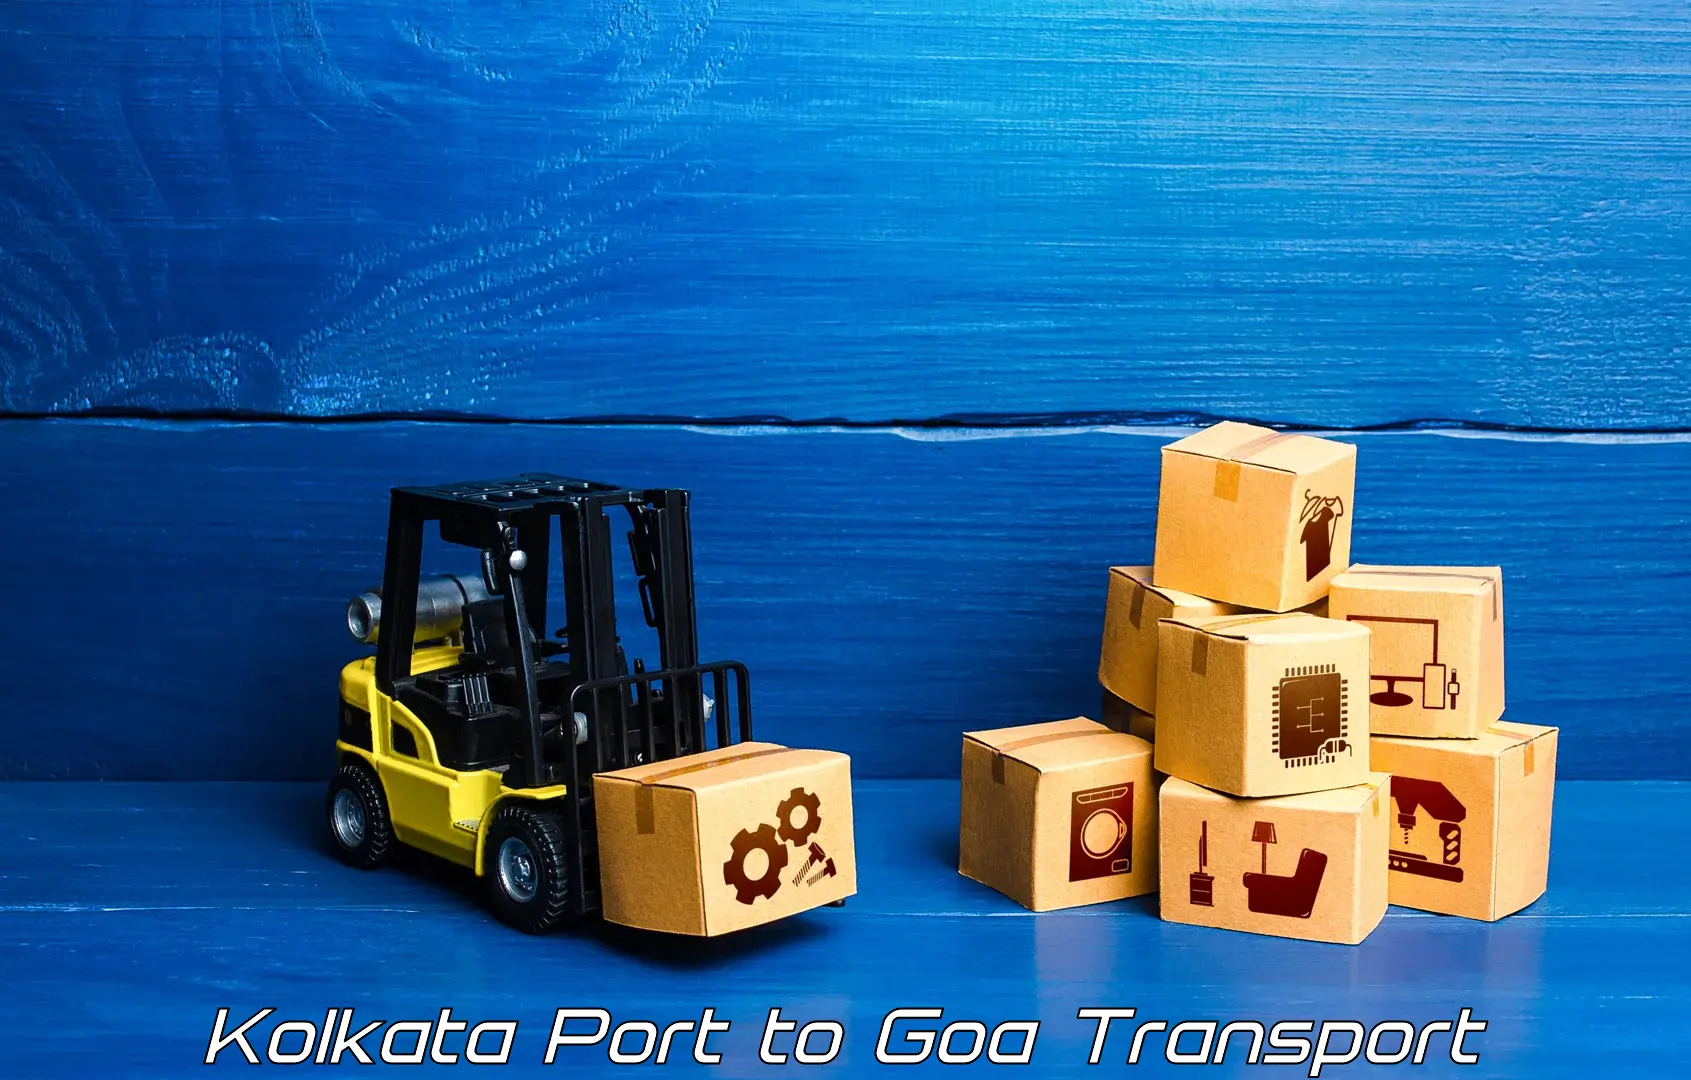 Transport in sharing Kolkata Port to Goa